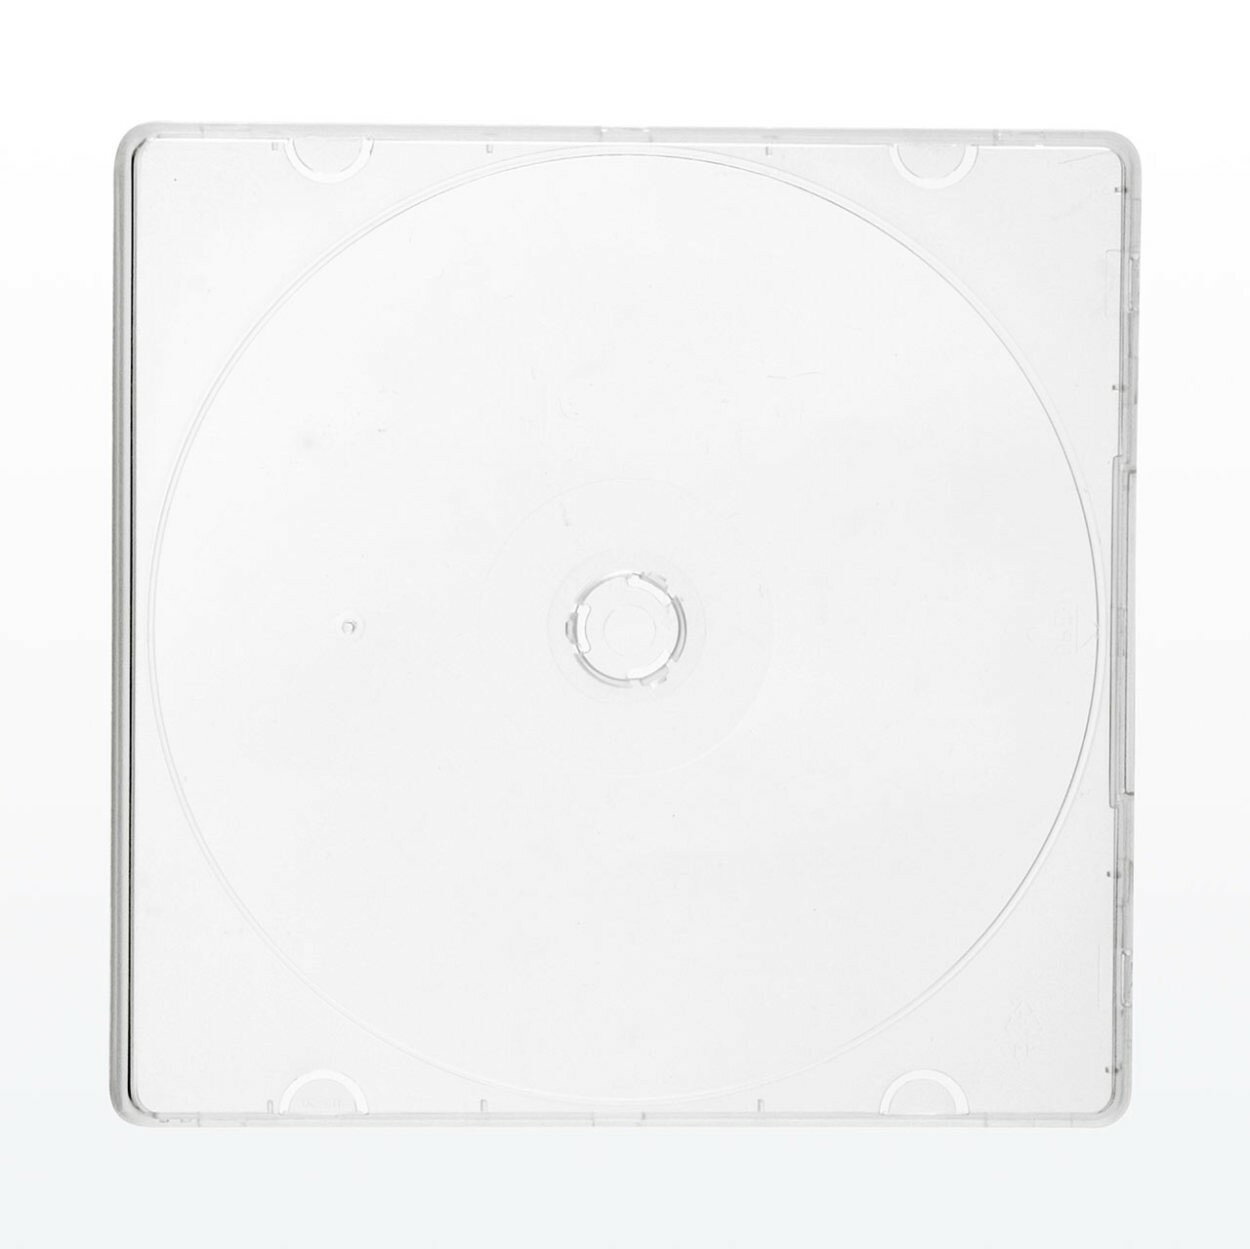 CDケース DVDケース 極薄 スリムケース(4.5mm) 1枚収納×25枚セット PP素材 収納ケース メディアケース